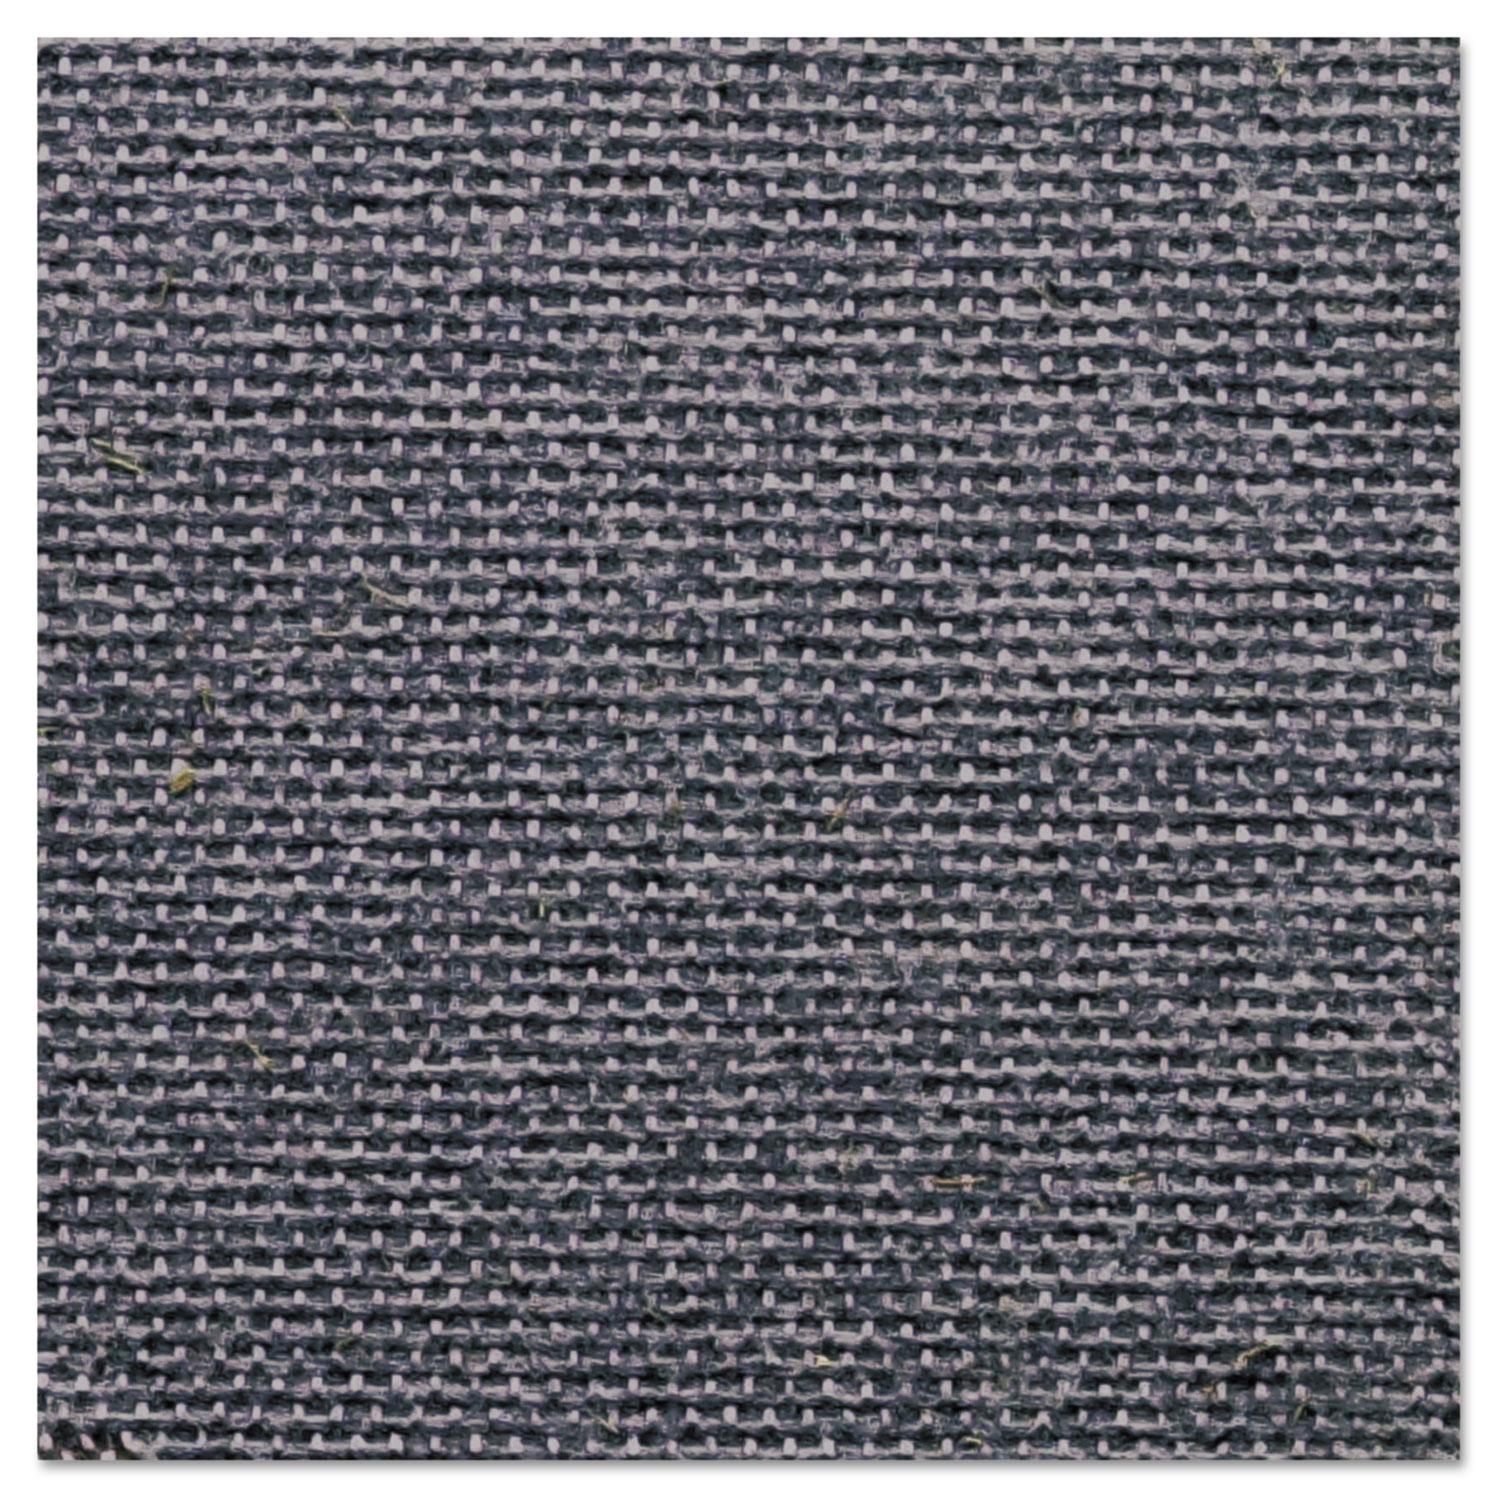 Enclosed Fabric-Cork Board, 48 x 36, Gray Surface, Graphite Aluminum Frame